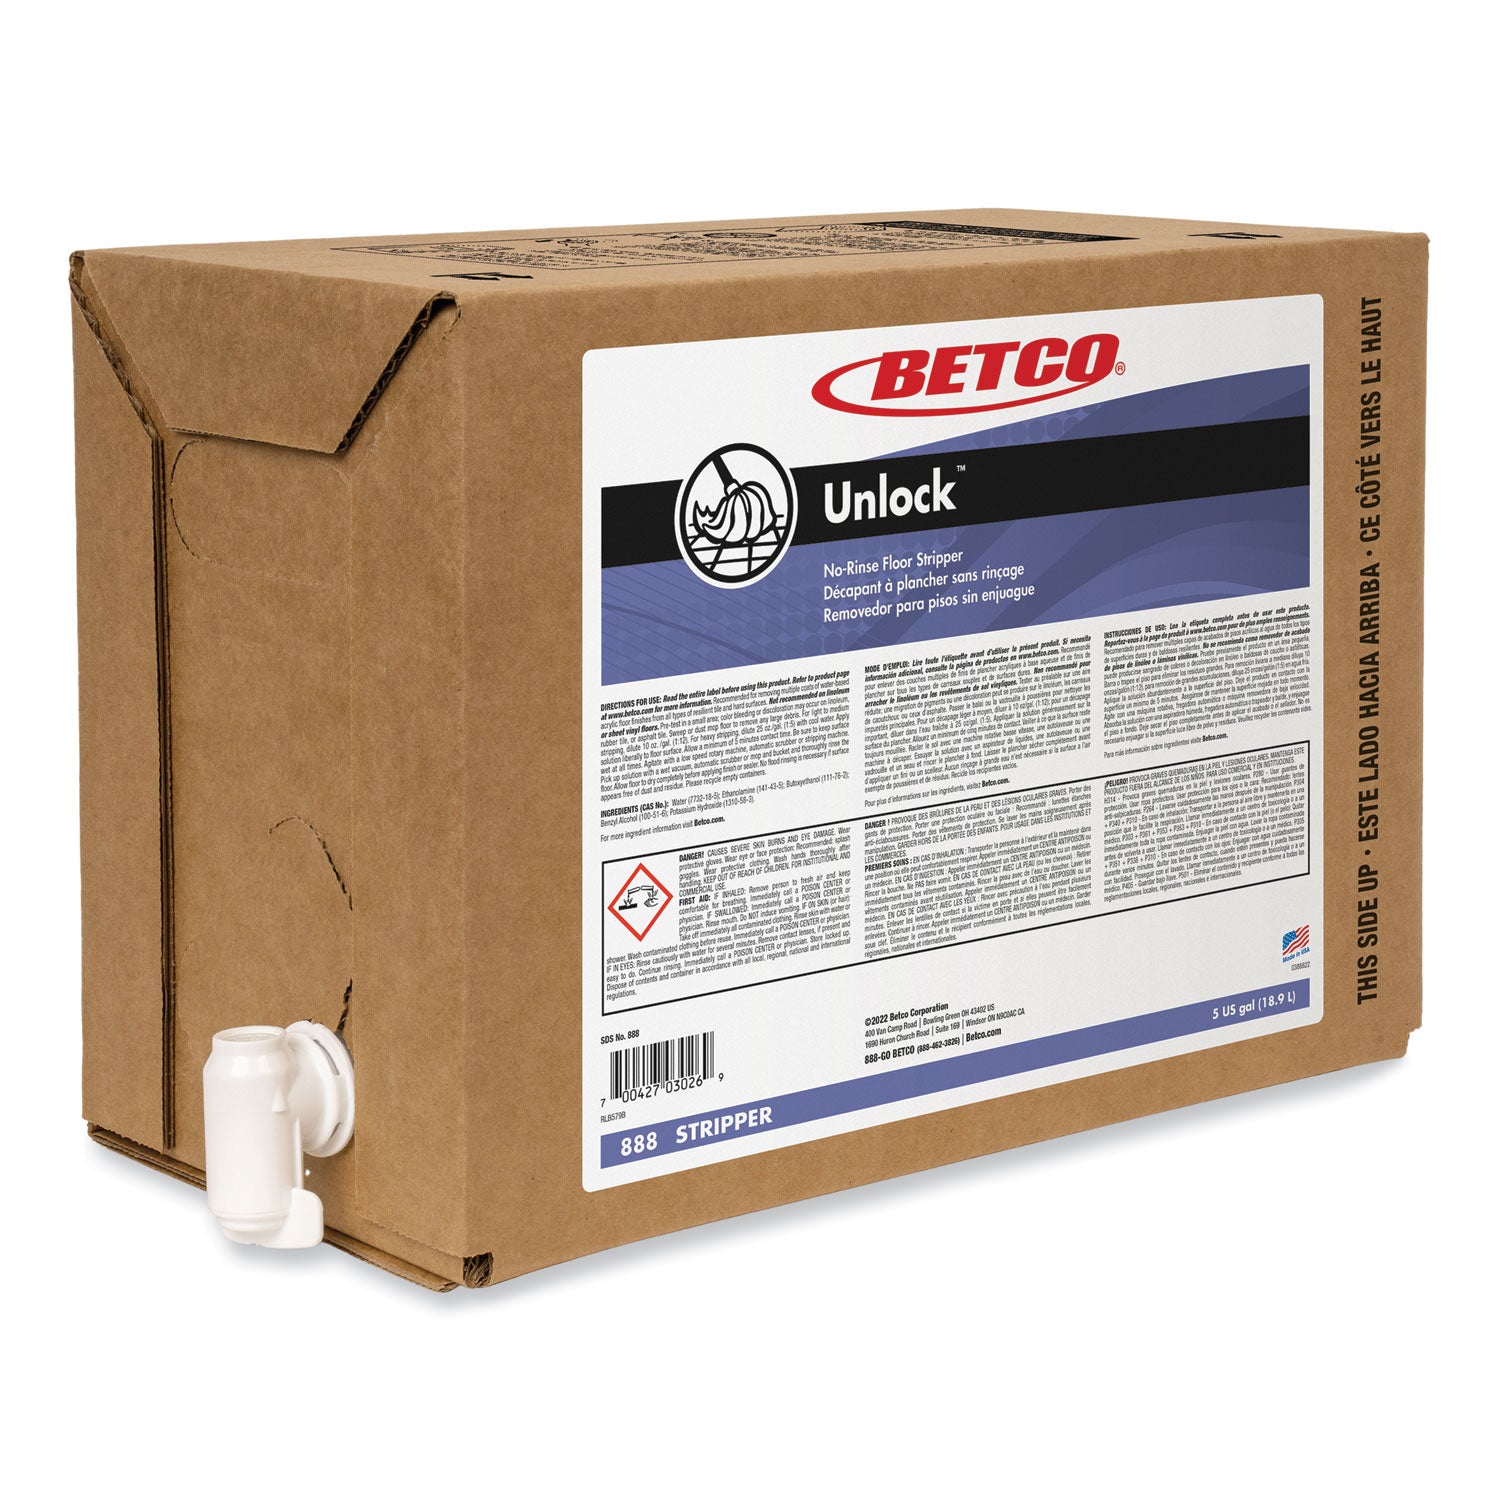 Betco Unlock No-Rinse Floor Stripper - Concentrate Liquid - 640 fl oz (20 quart) - 1 Each - Clear - 4